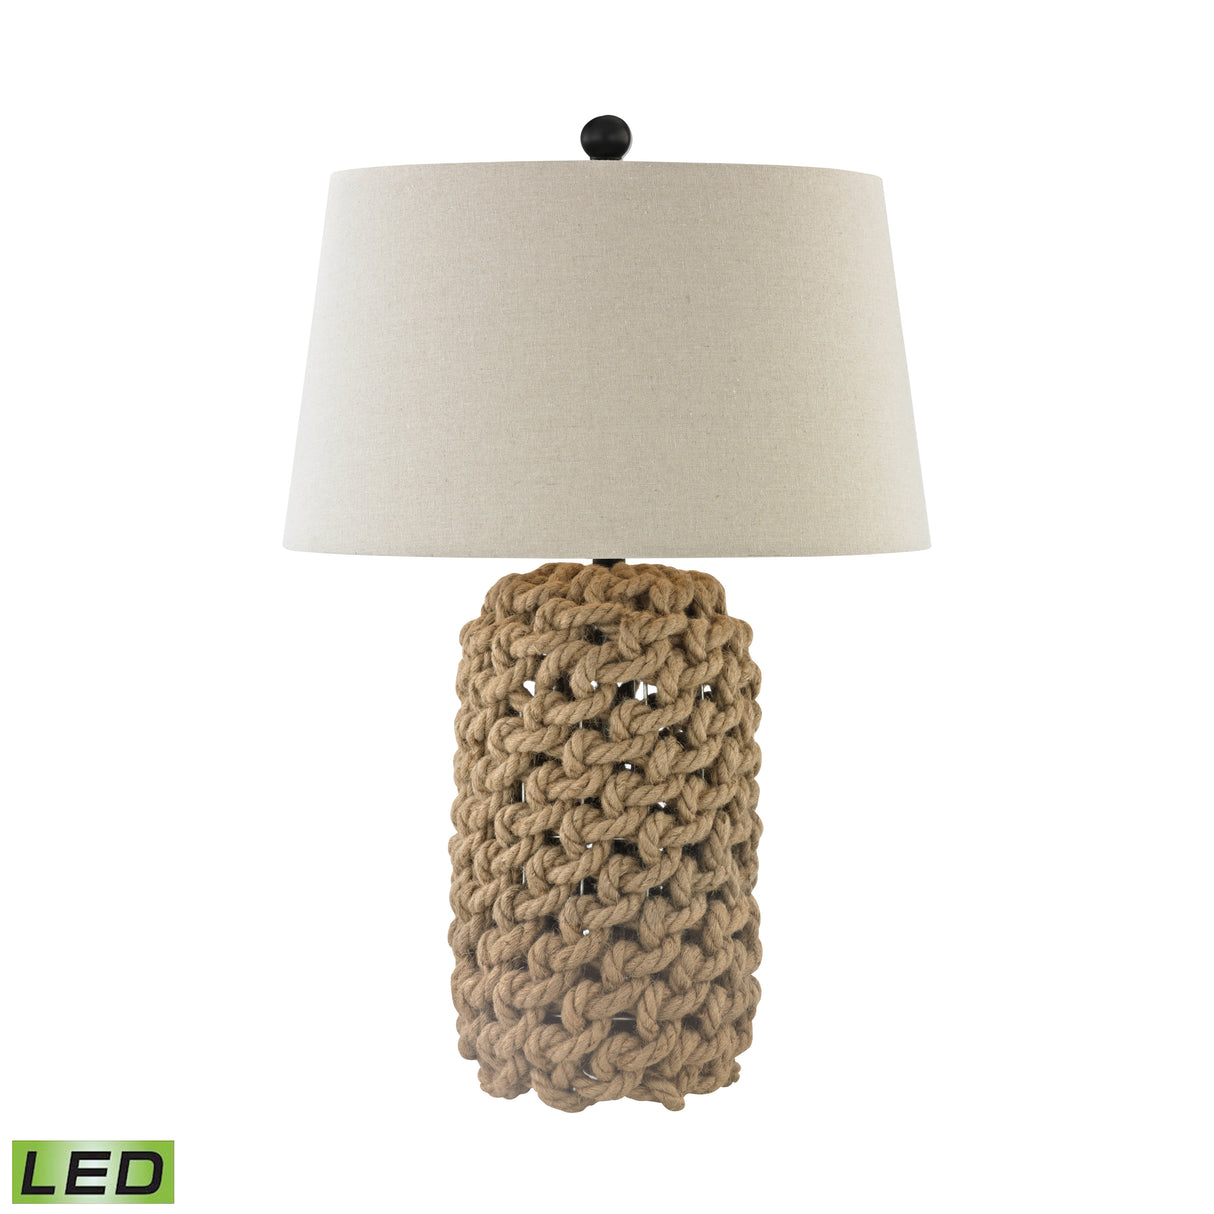 Elk D3050-LED Rope 29.5'' High 1-Light Table Lamp - Natural - Includes LED Bulb